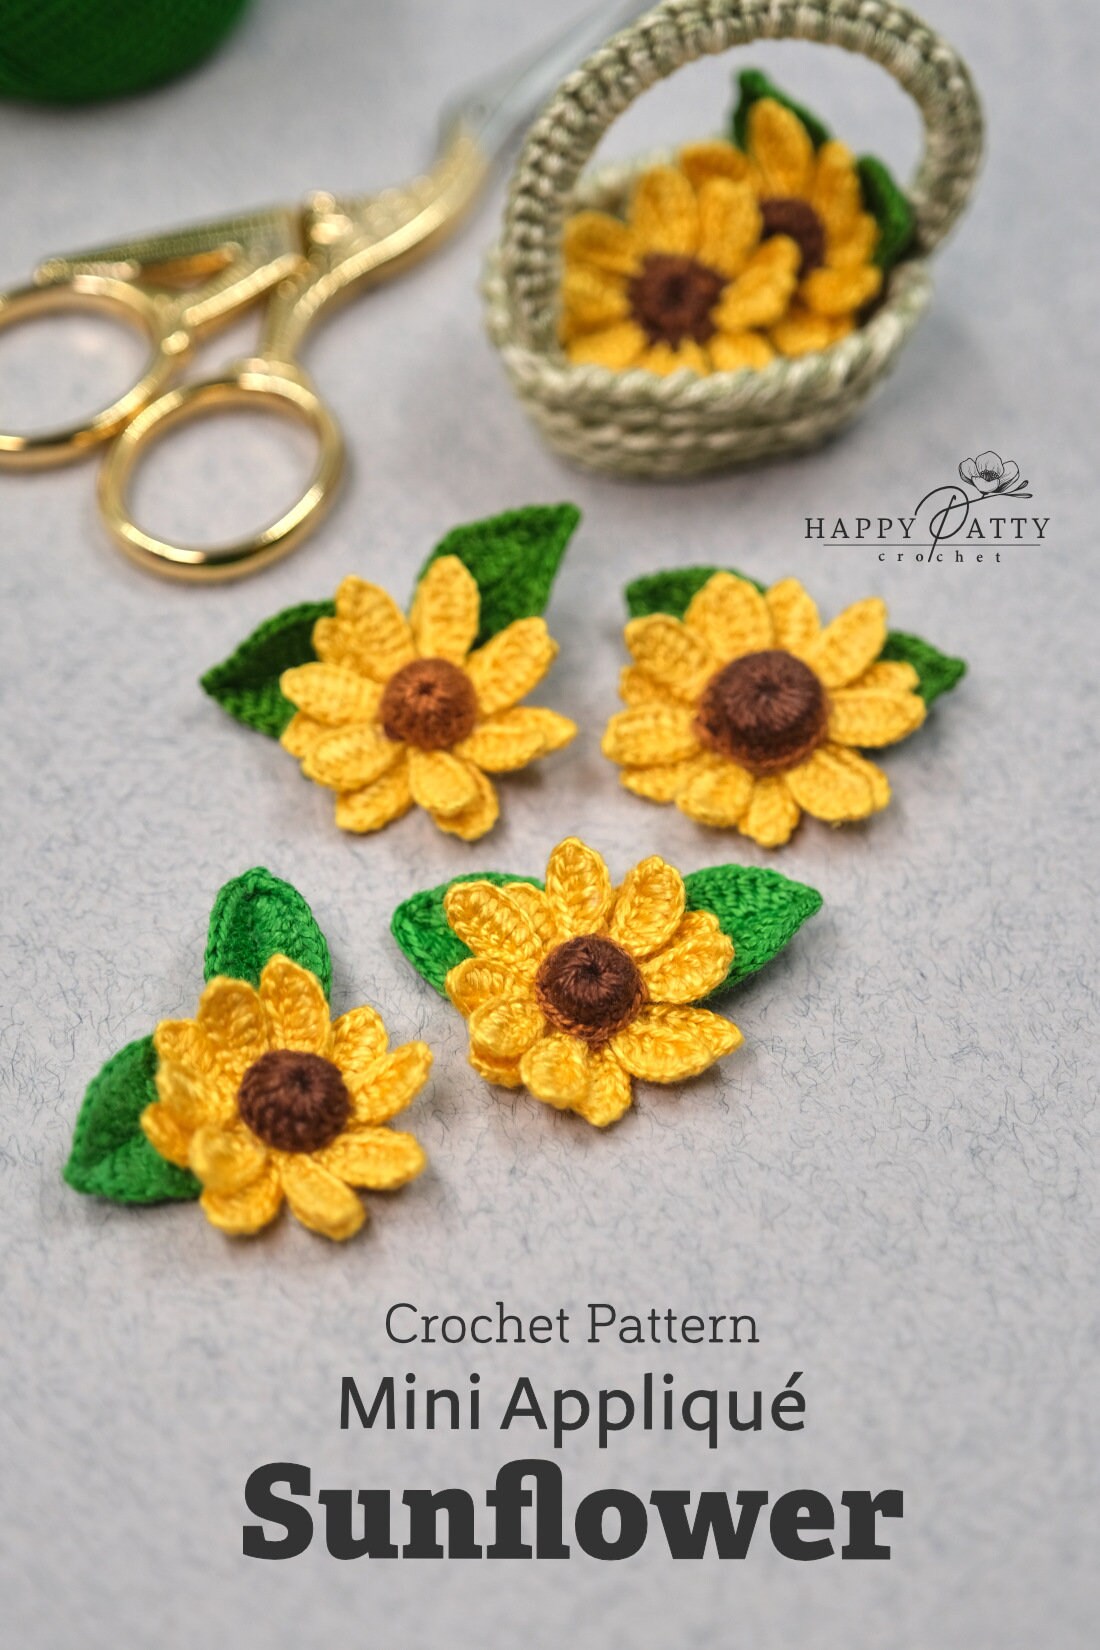 Crochet Mini Sunflower Applique Pattern - Crochet Flower Pattern for a Miniature Sunflower Applique - Crochet Sunflower Pattern